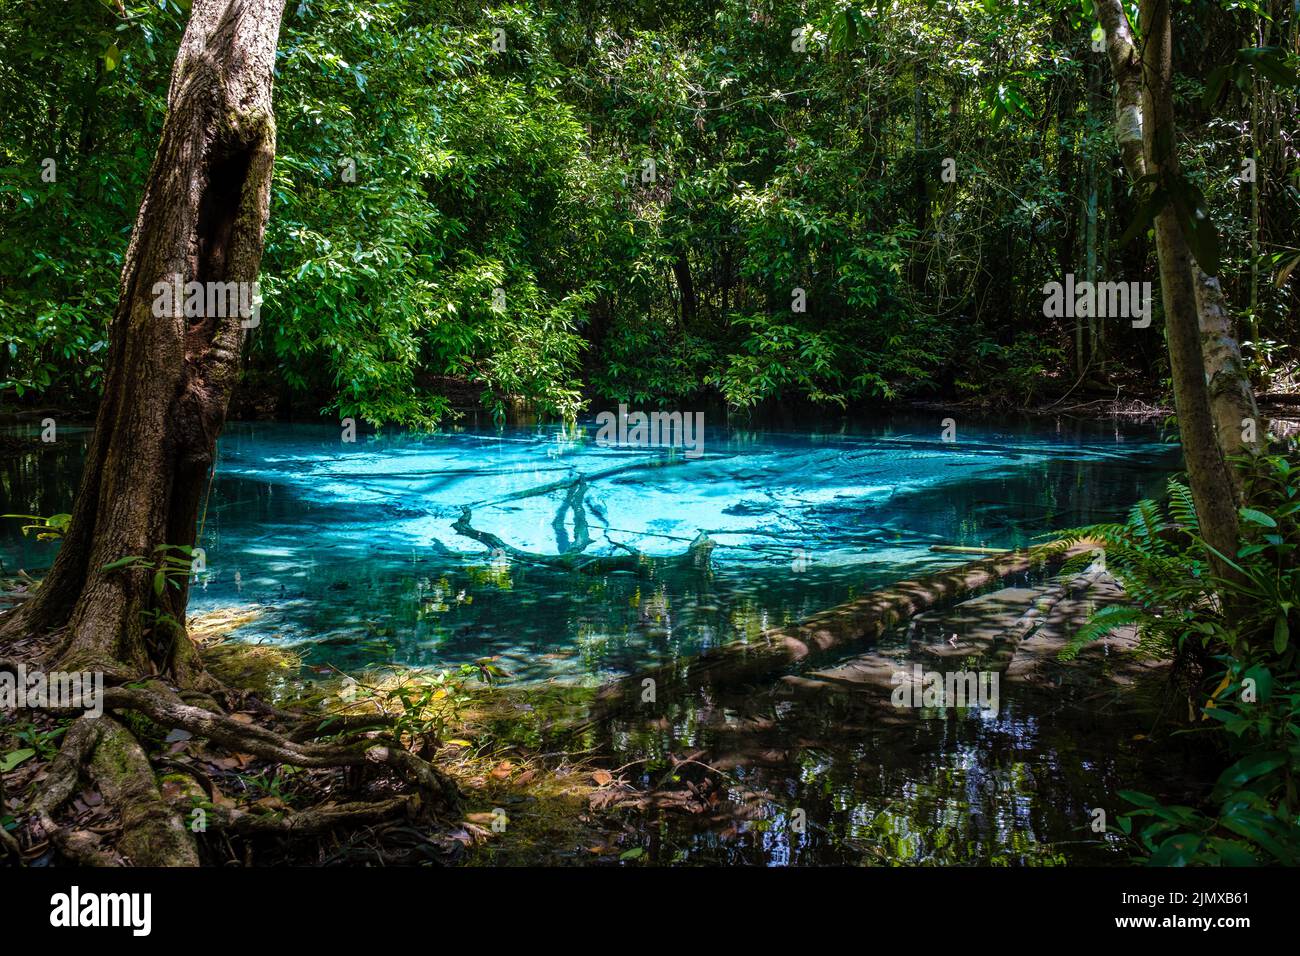 Emerald lake and Blue pool Krabi Thailand mangrove forest Krabi Thailand. Stock Photo